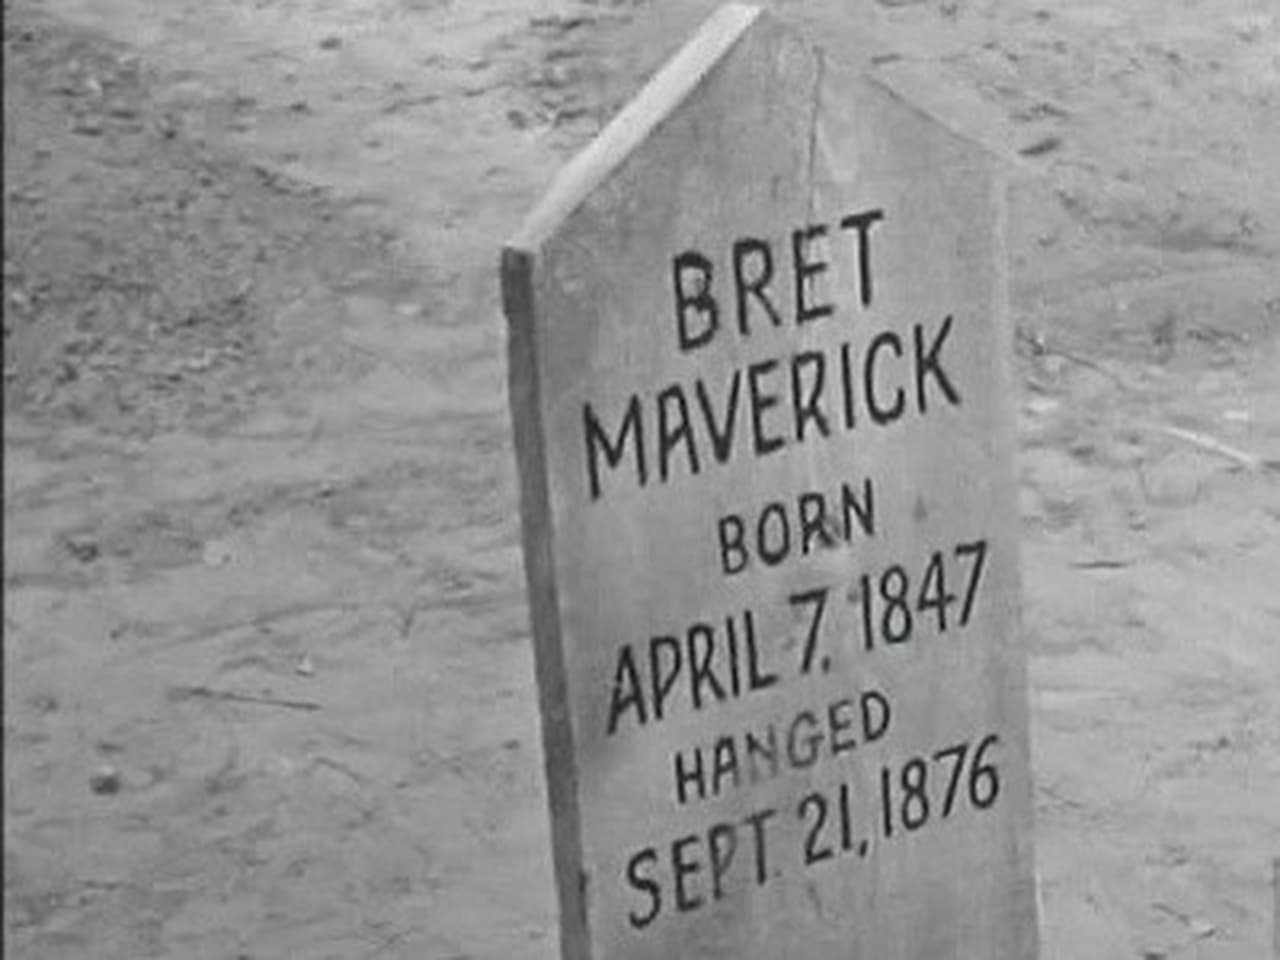 Maverick - Season 2 Episode 1 : The Day They Hanged Bret Maverick